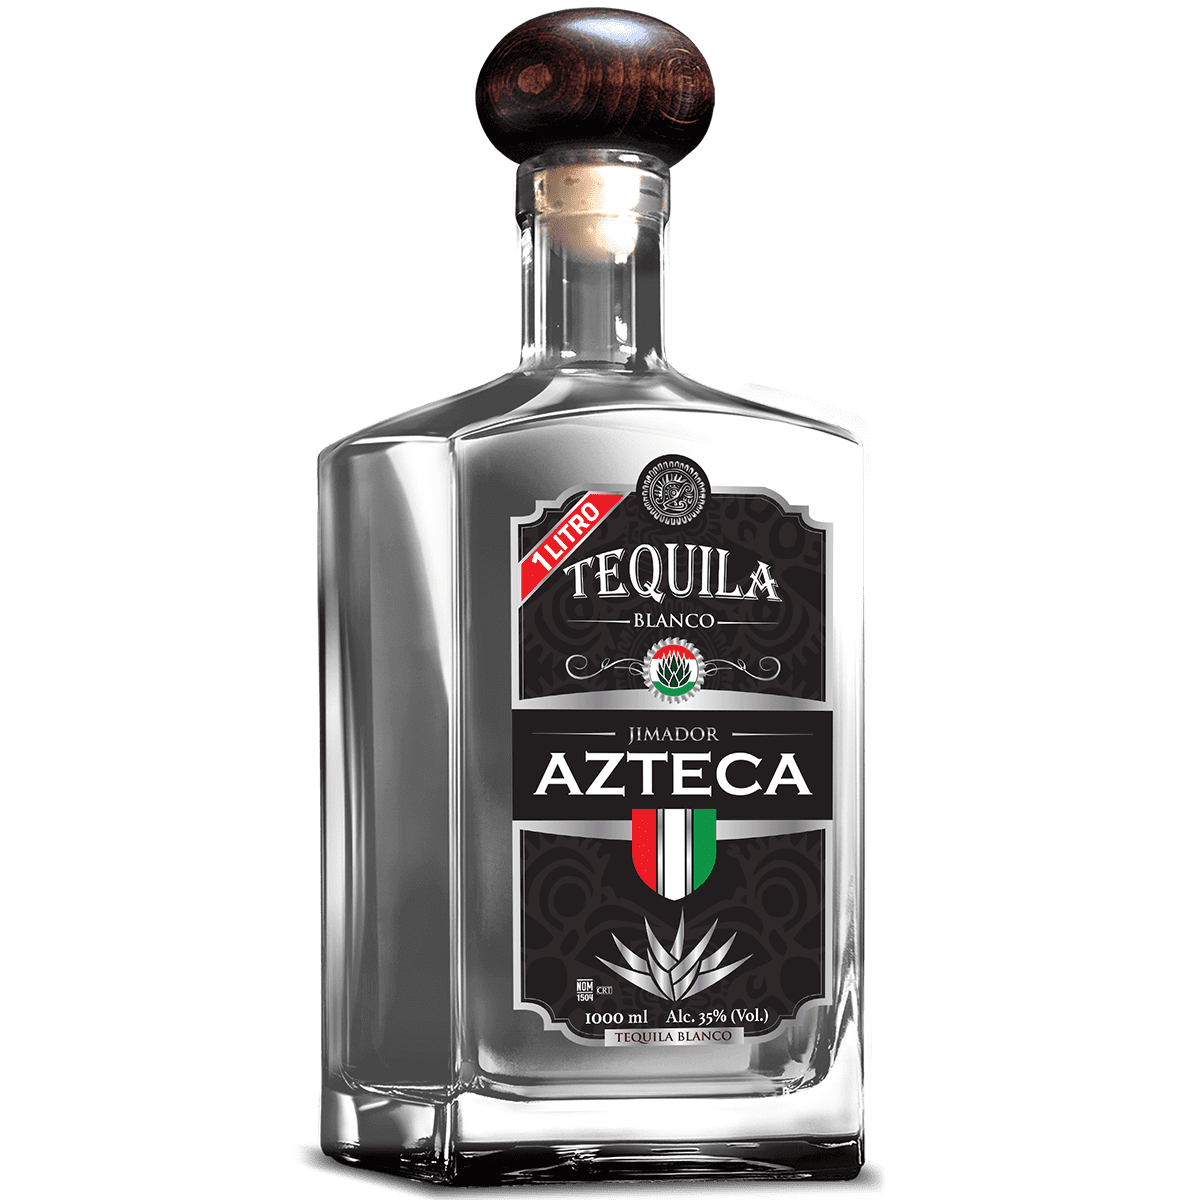 Tequila Azteca blanco 1000 ml